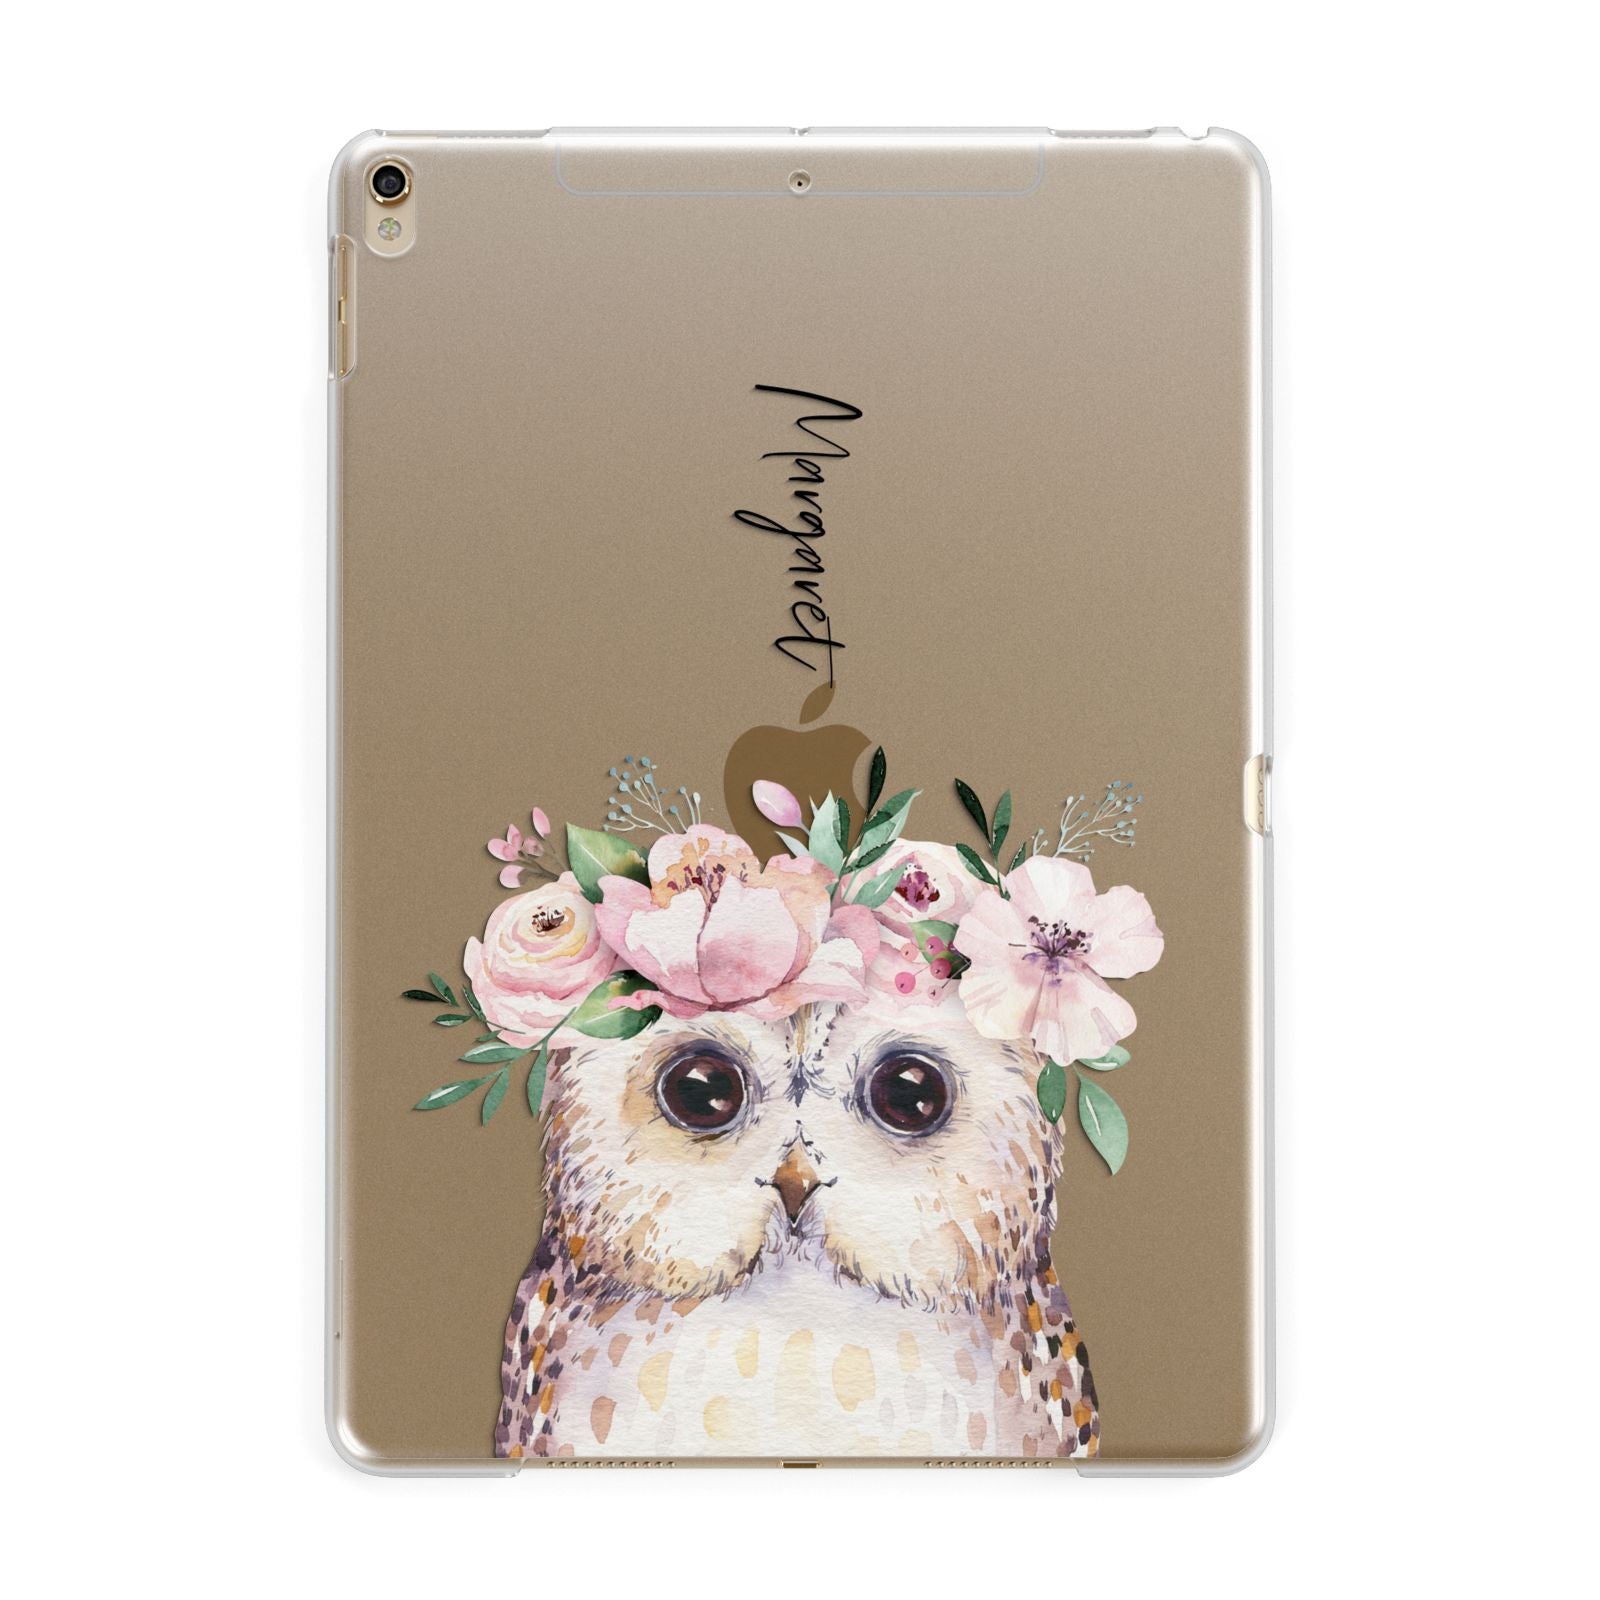 Personalised Name Owl Apple iPad Gold Case